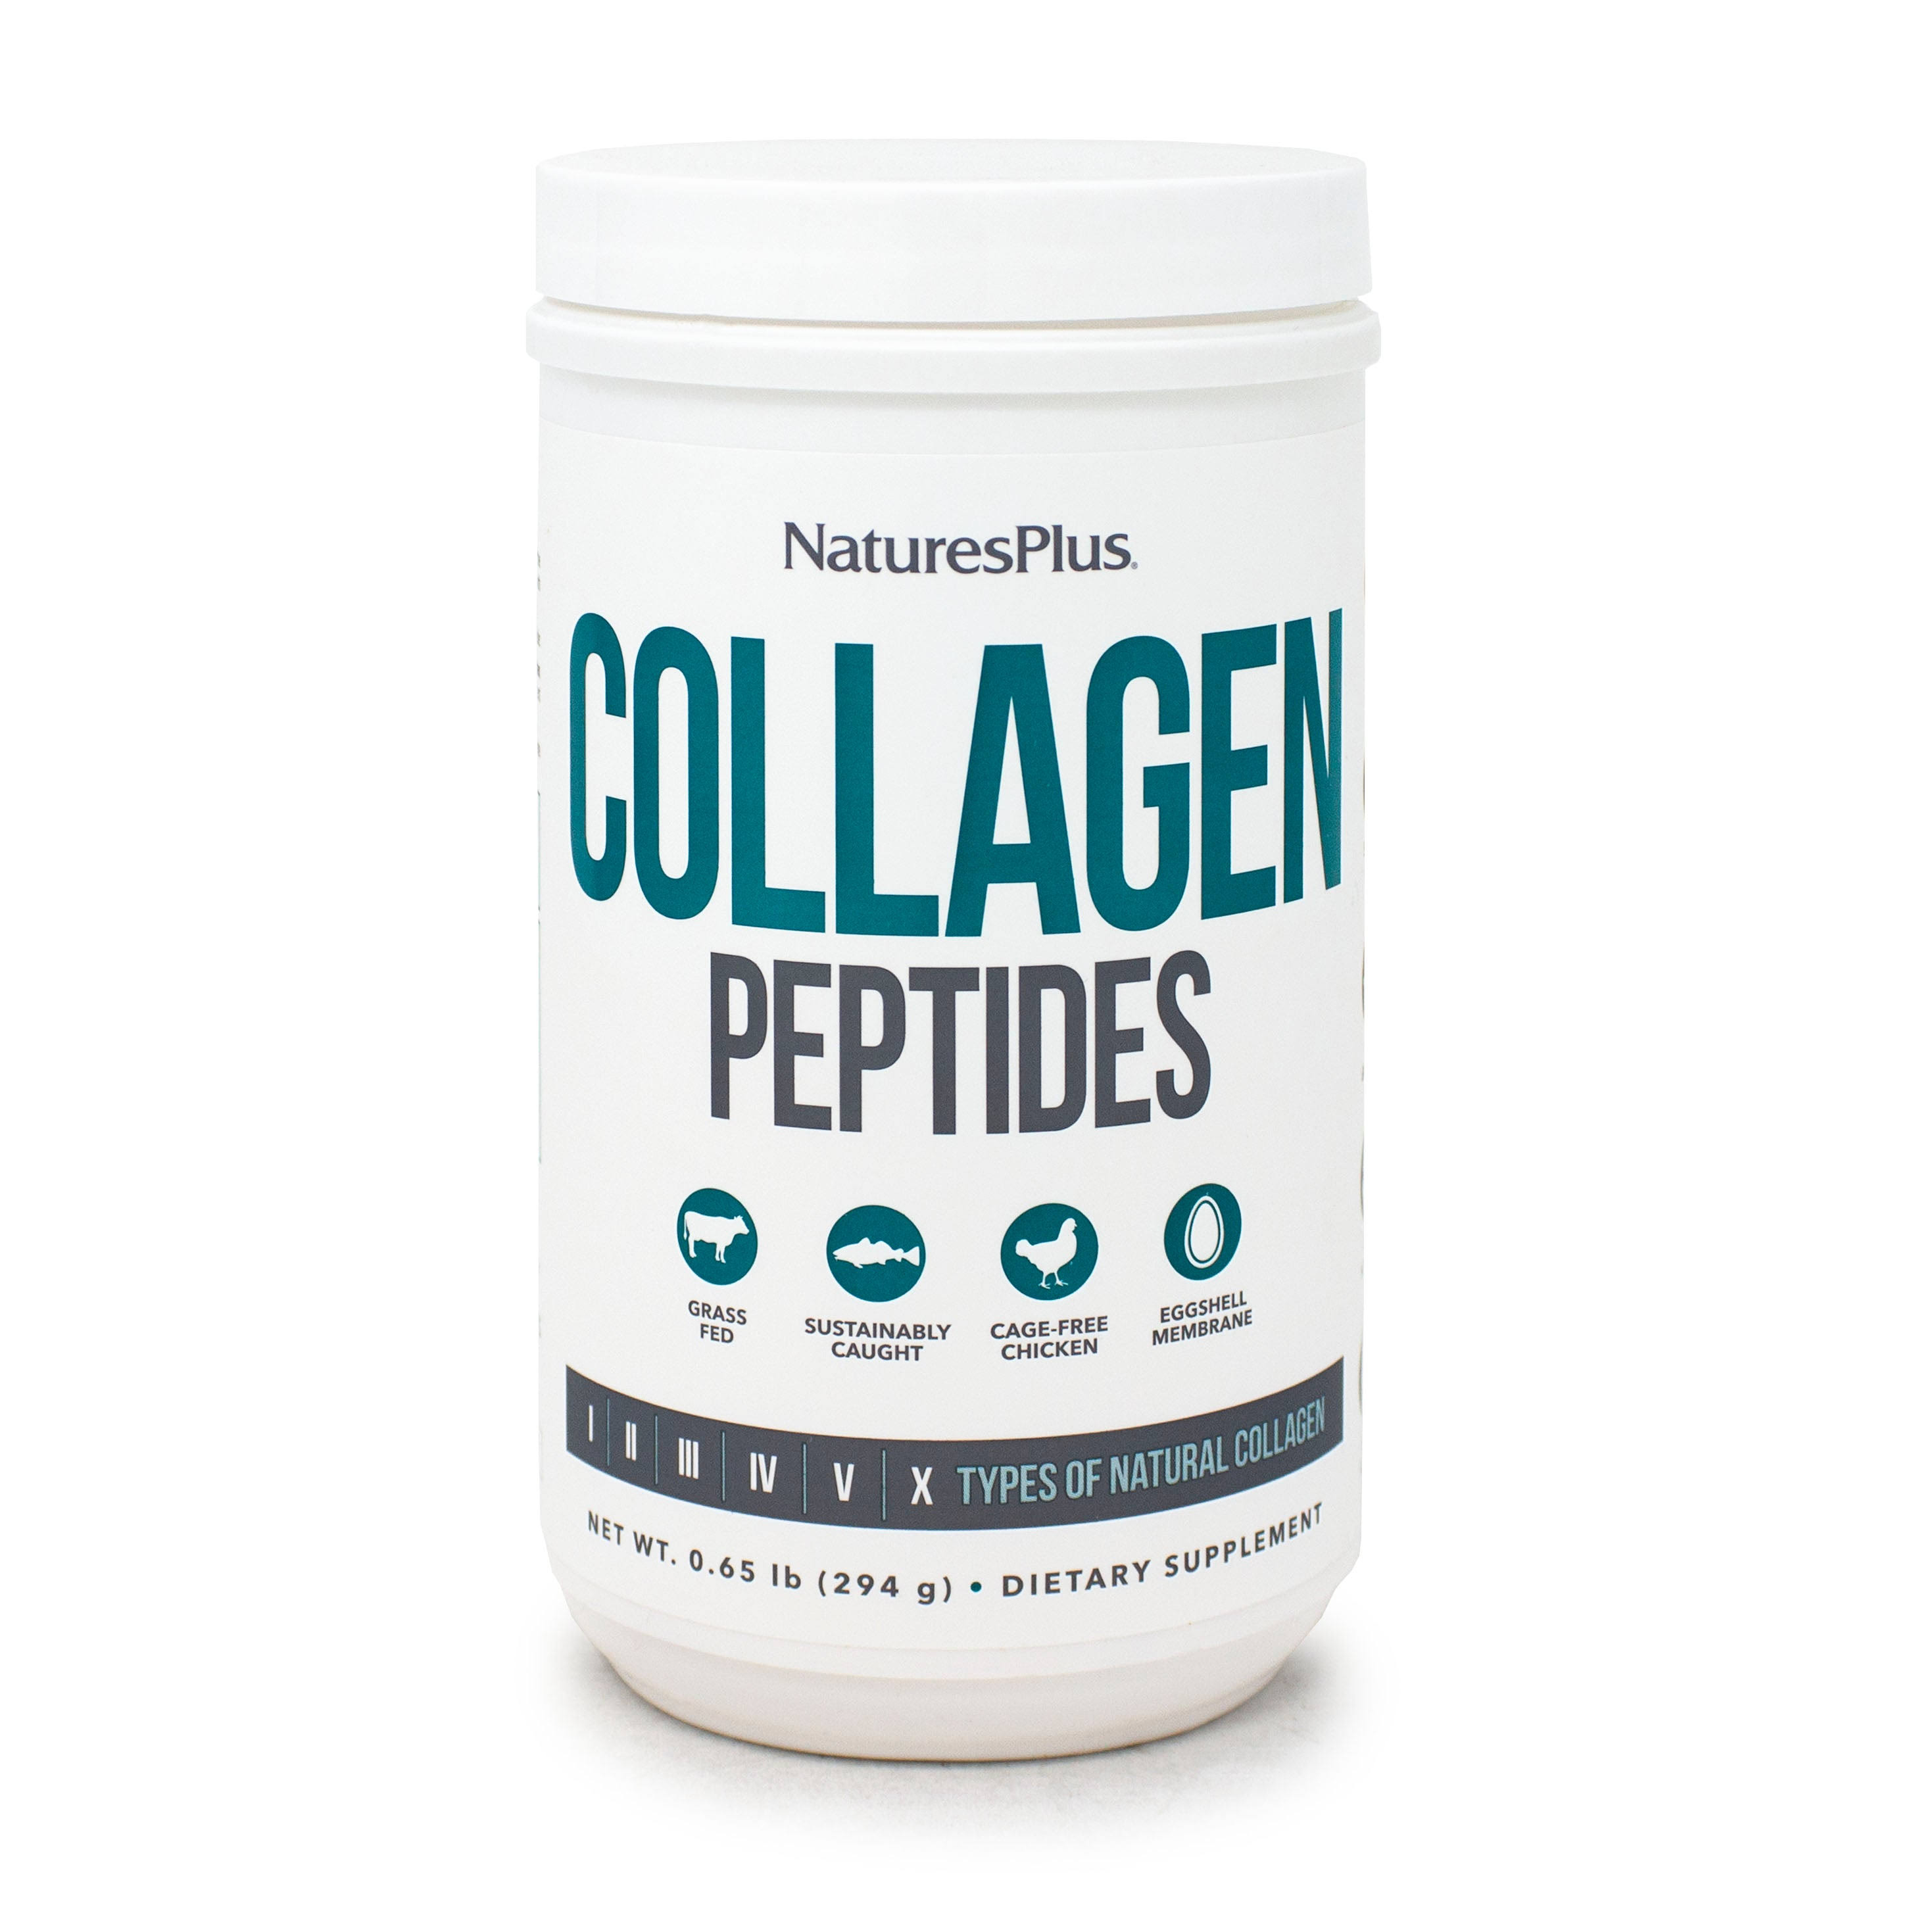 Nature's Plus Collagen Peptides - 0.65 lb